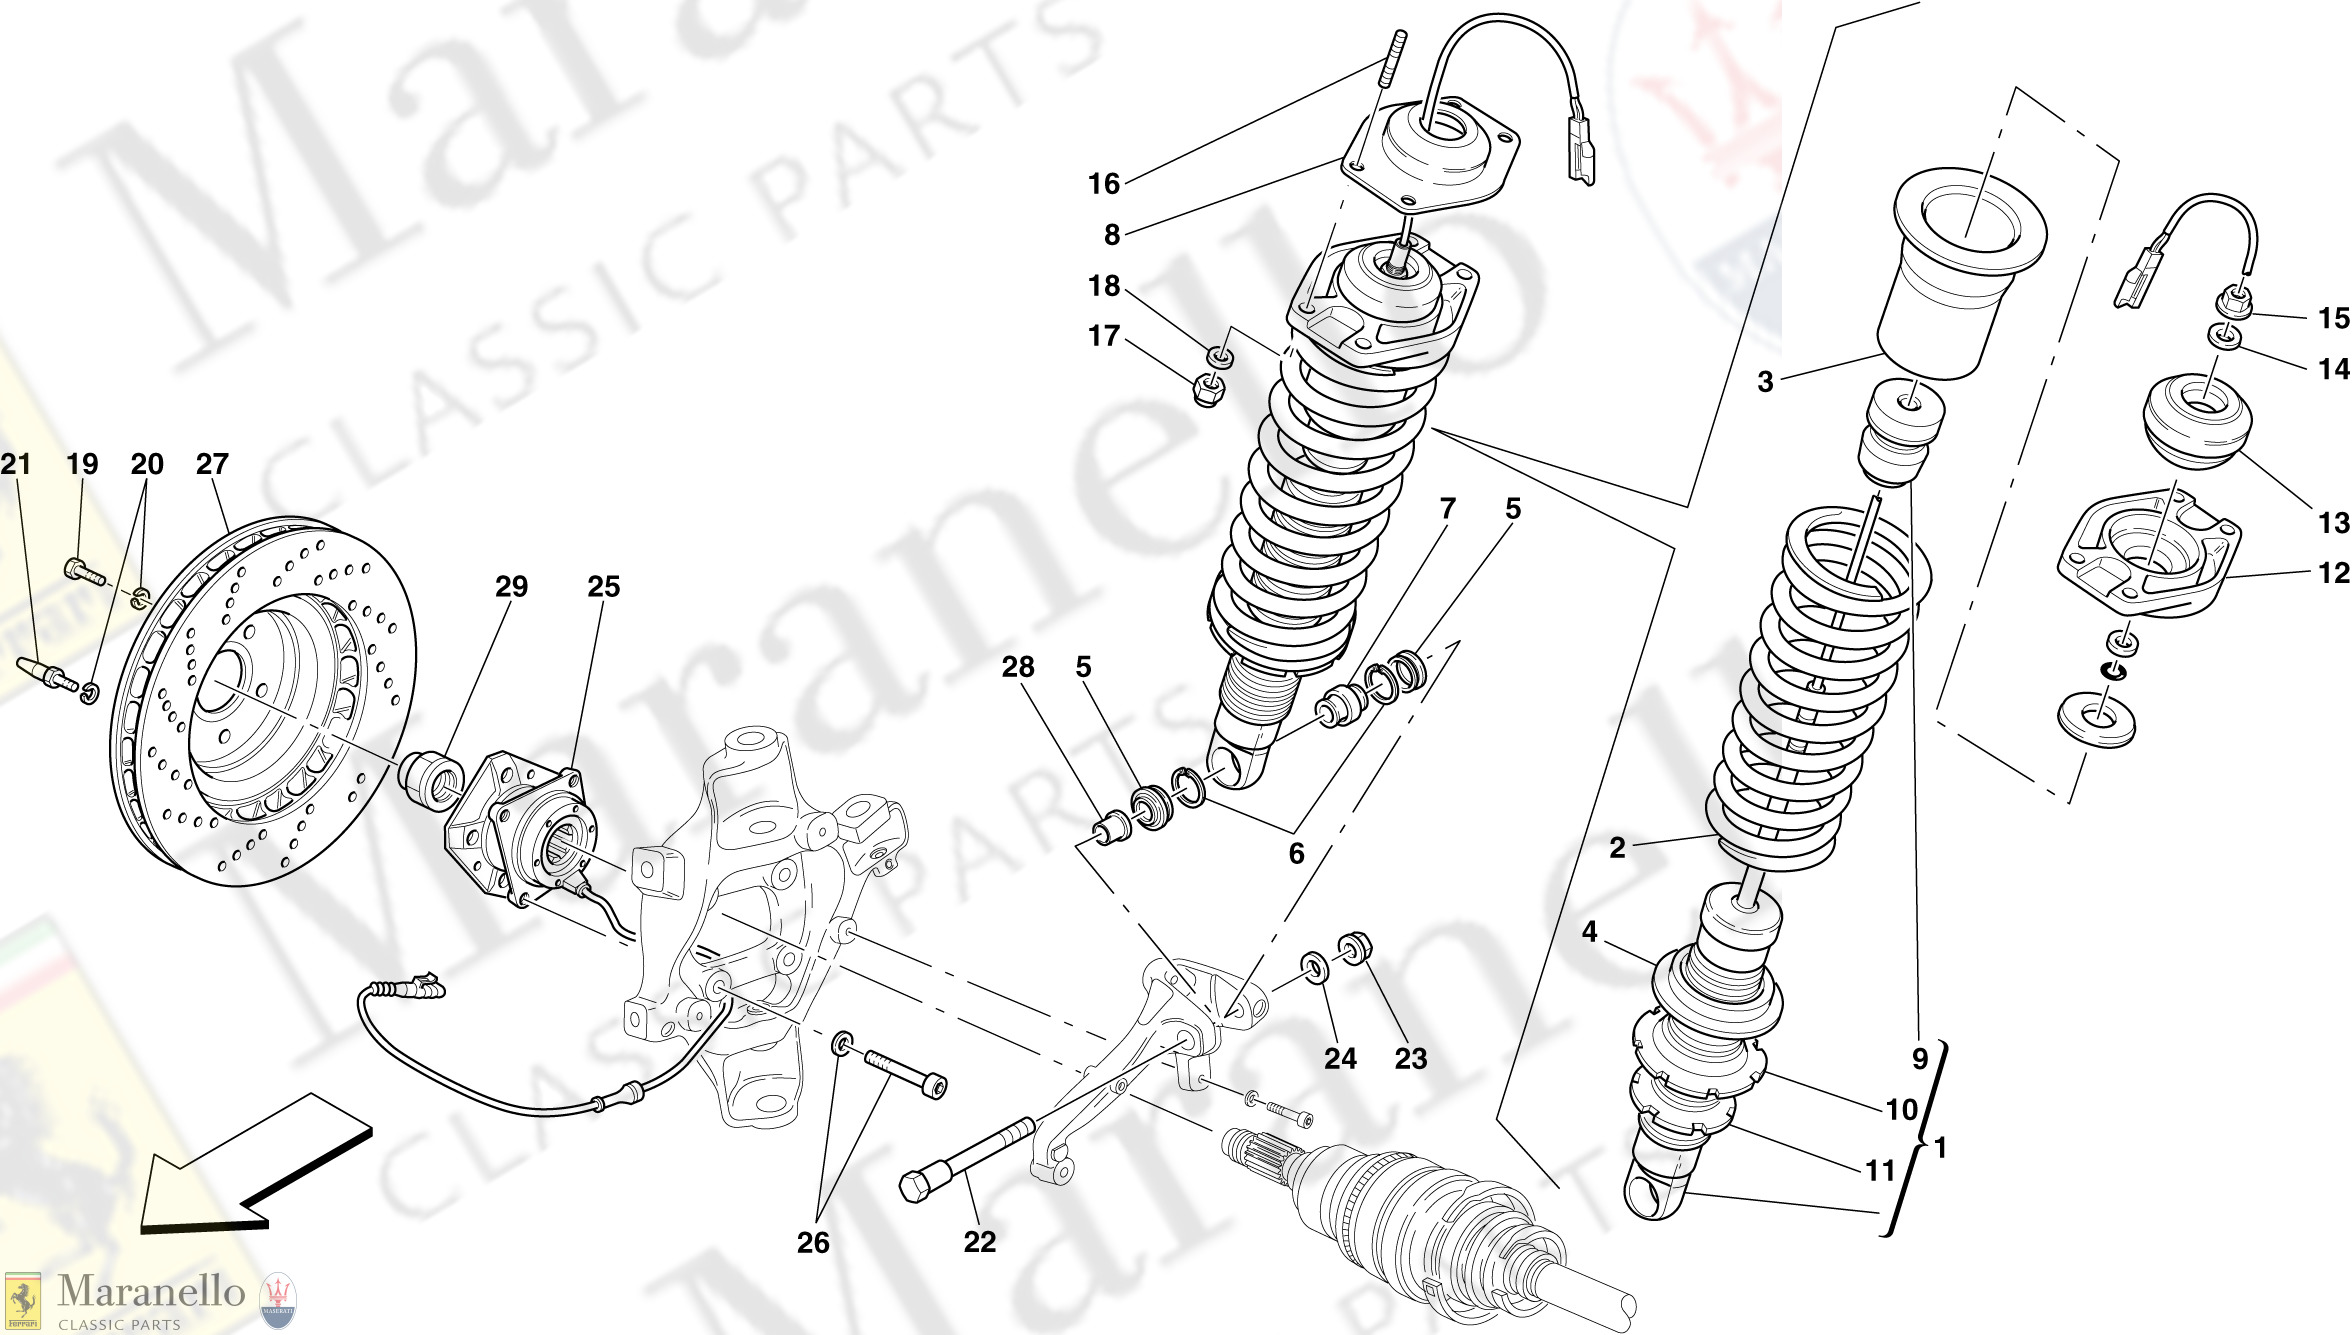 056 - Rear Suspension - Shock Absorber And Brake Disc